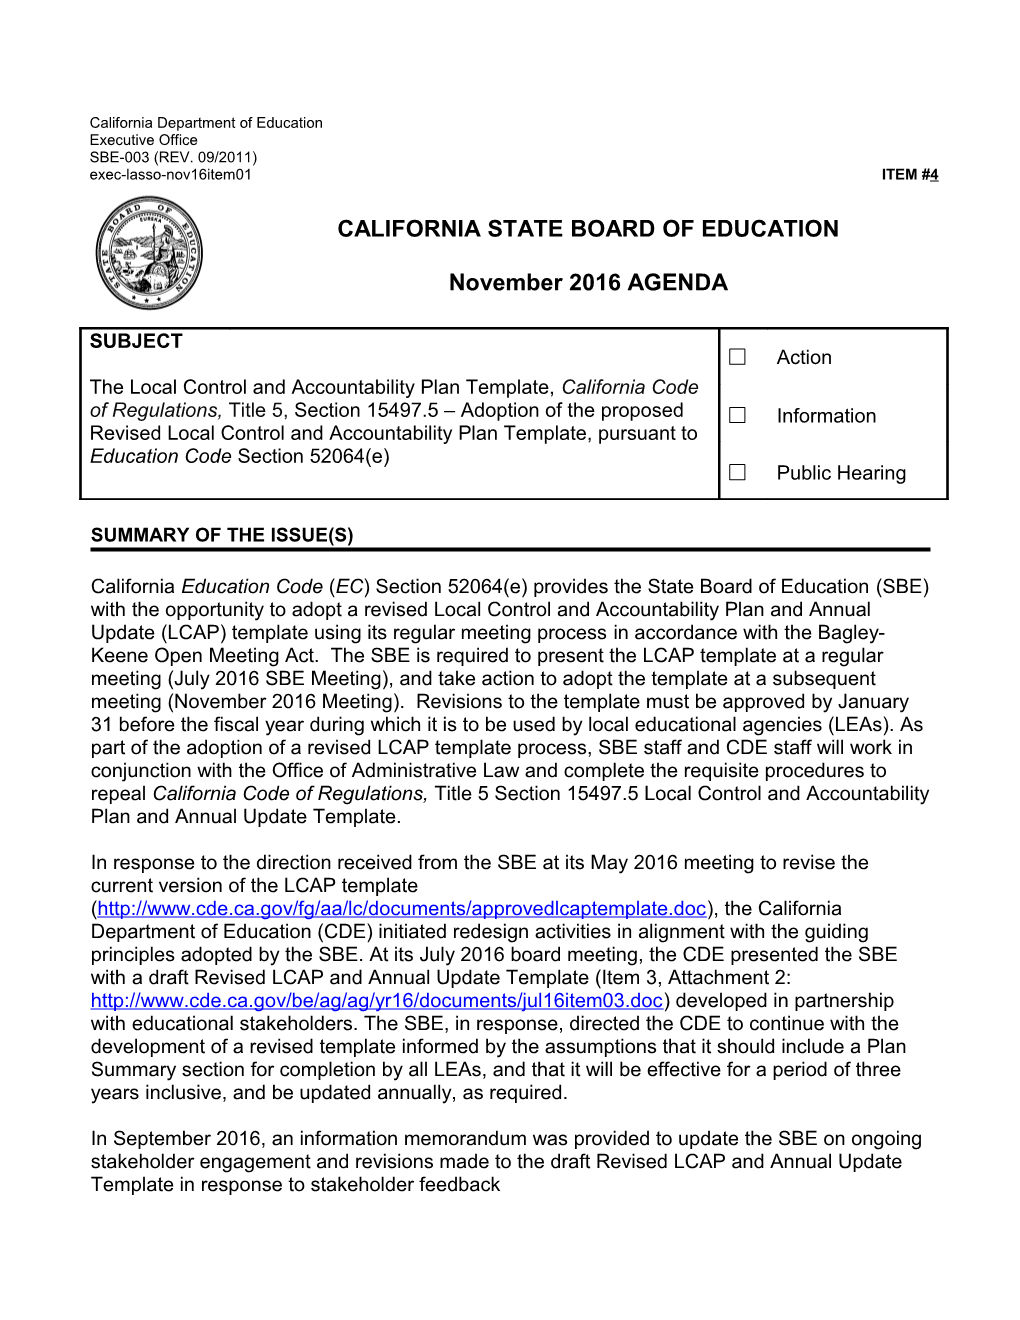 November 2016 Agenda Item 04 - Meeting Agendas (CA State Board of Education)